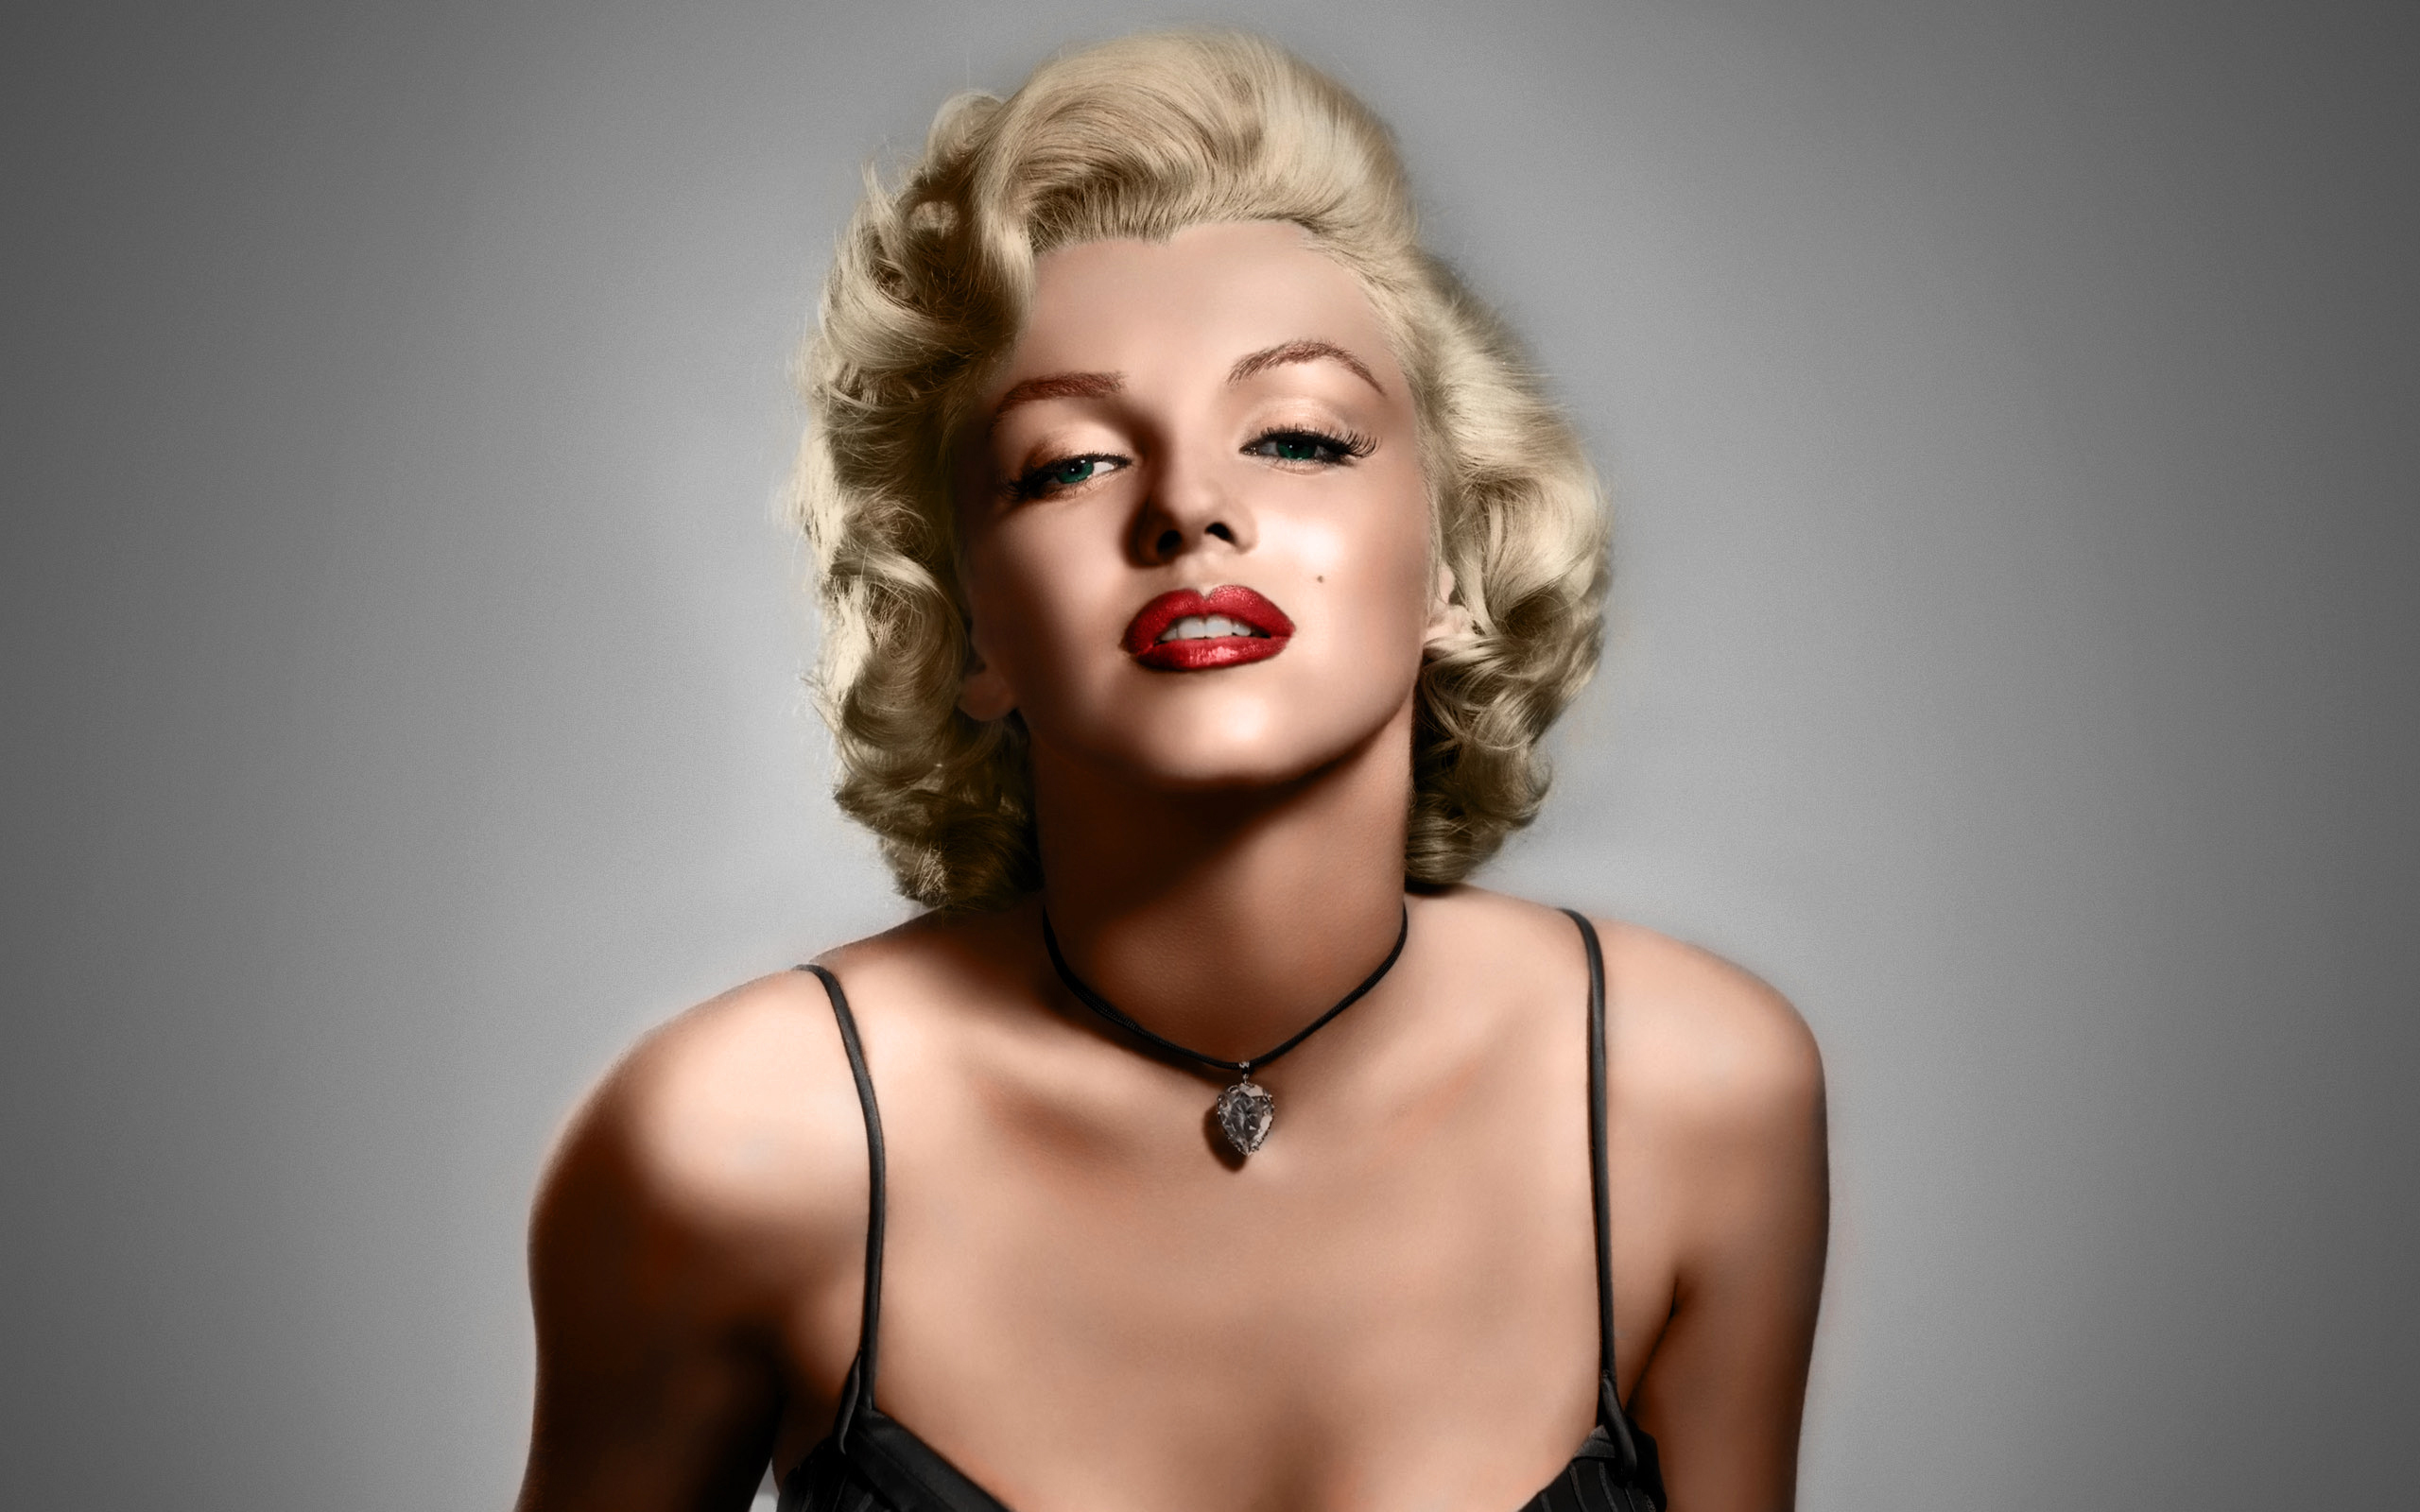 Norma jeane mortenson Marilyn monroe Actress Singer Blonde Eyes Girl